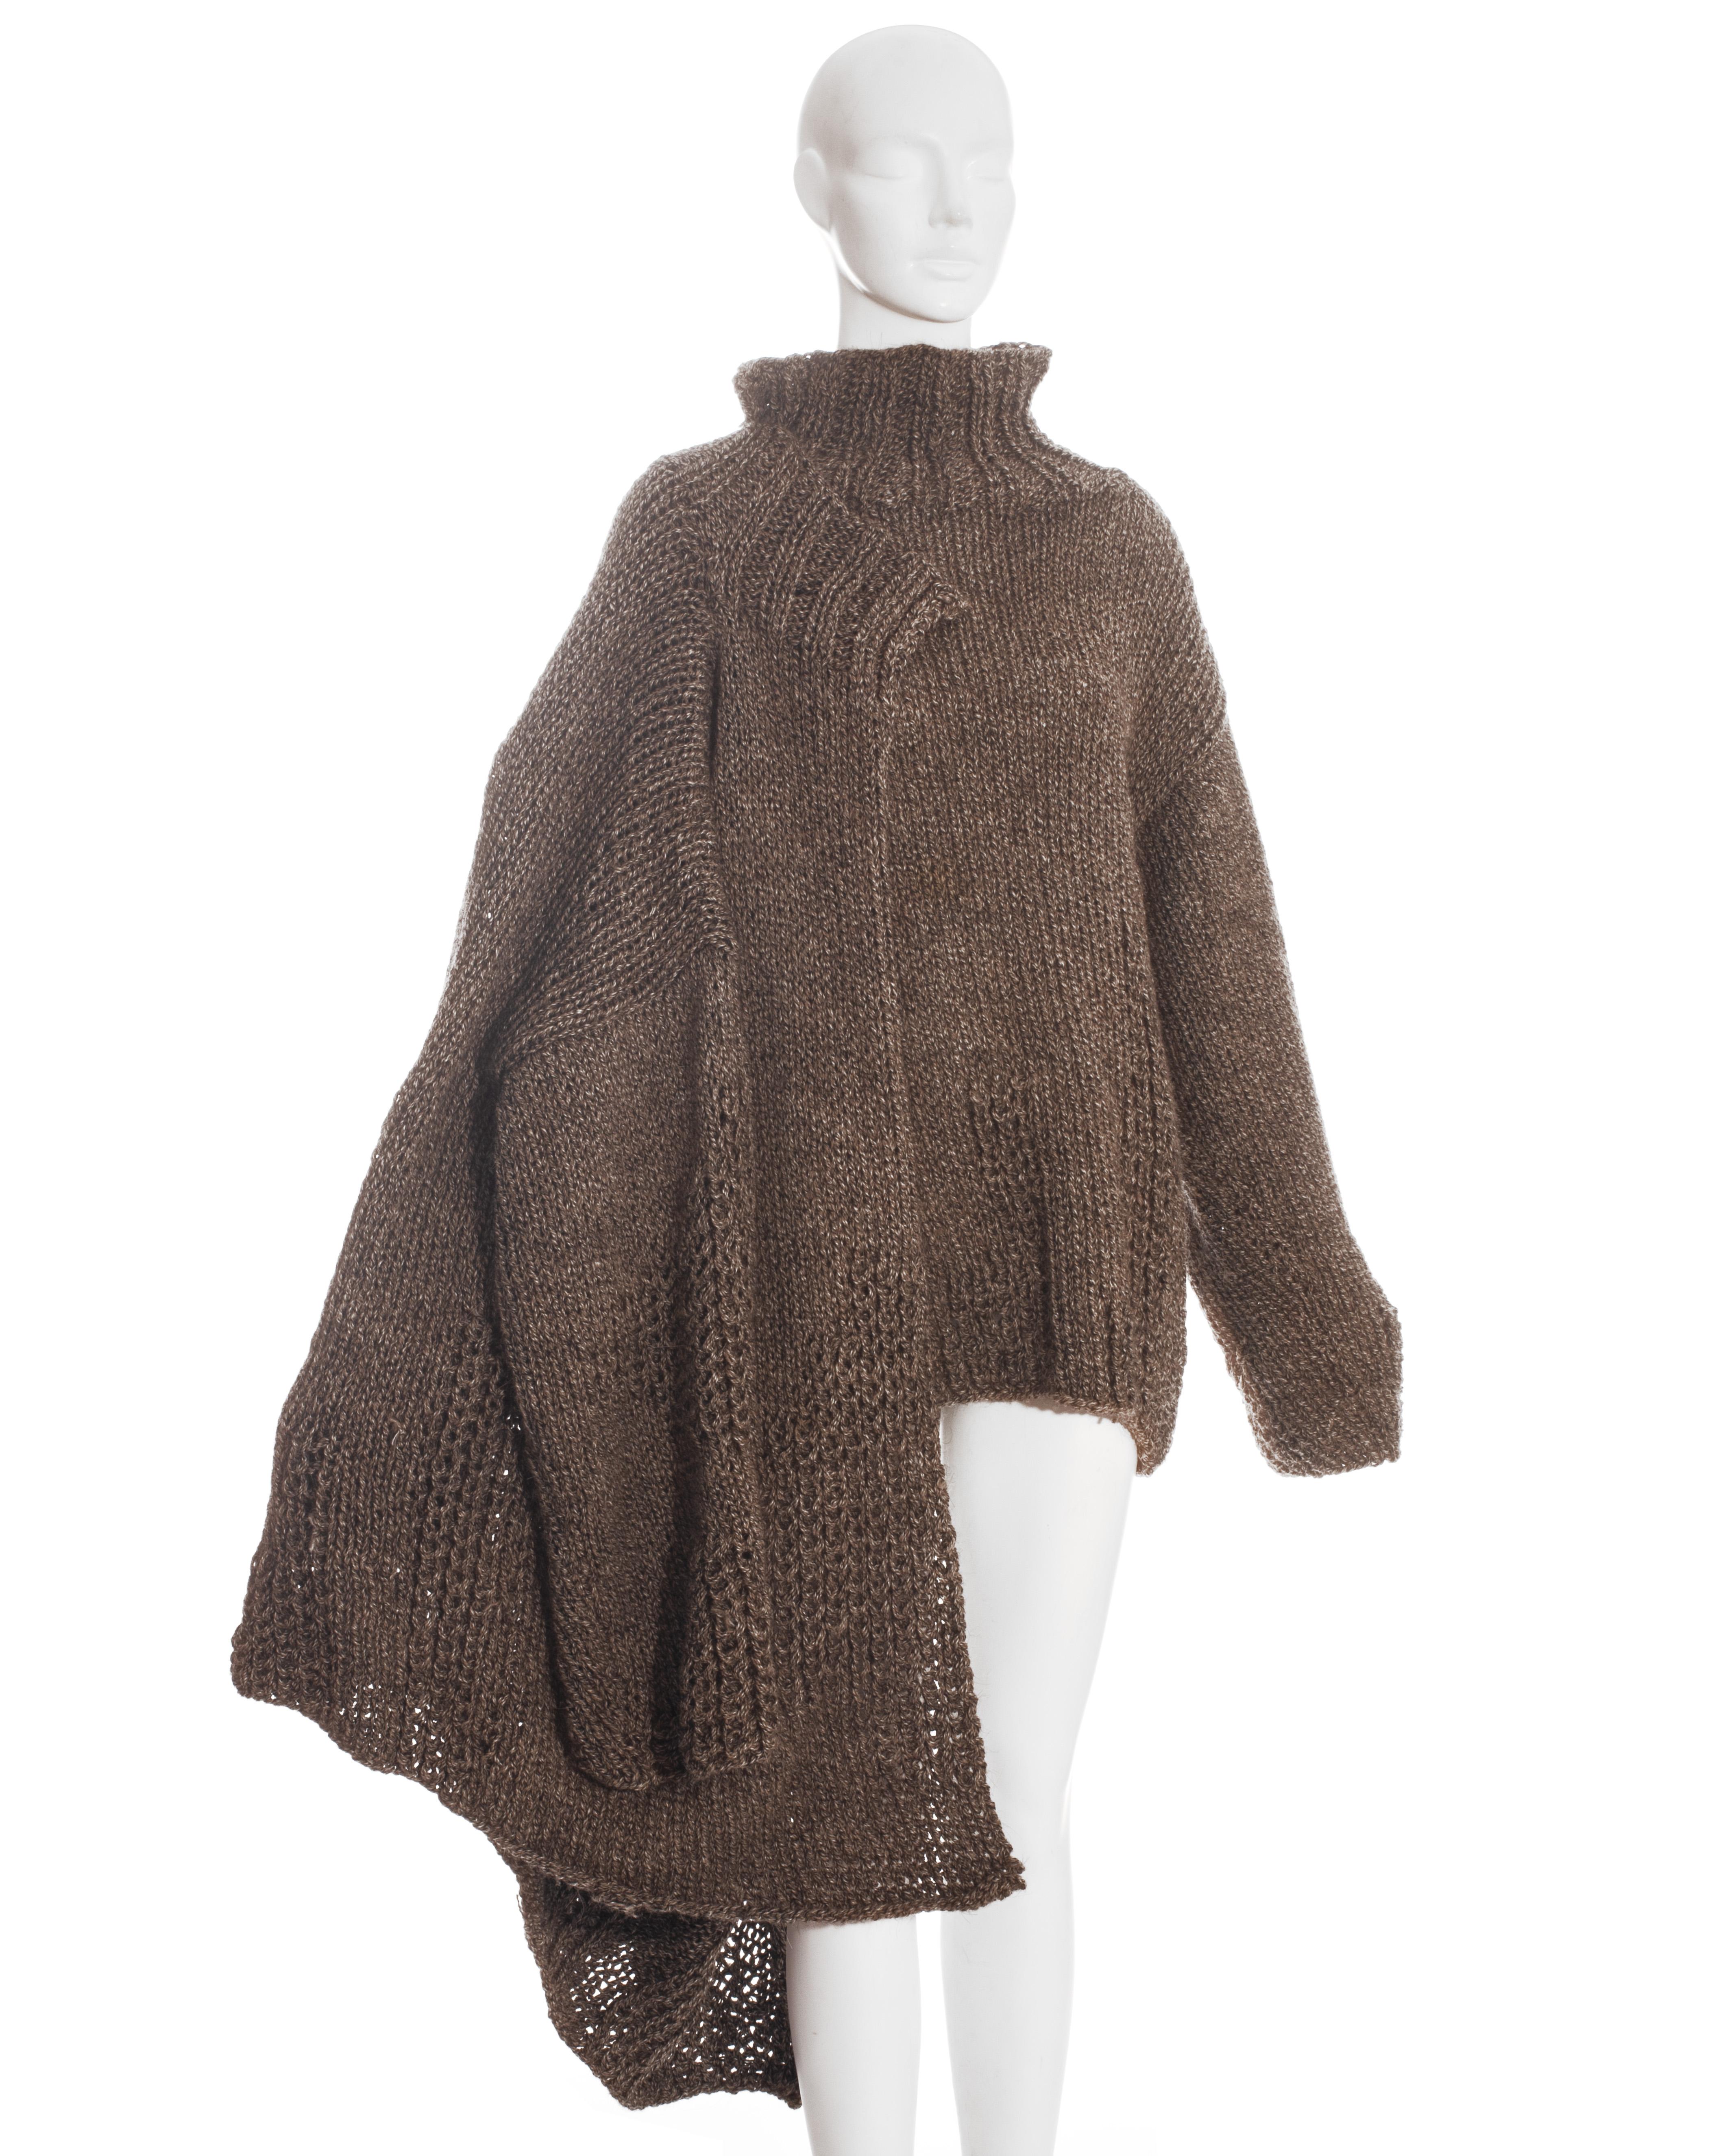 Yohji Yamamoto brown knitted wool oversized cardigan and sweater, fw 1984 For Sale 1